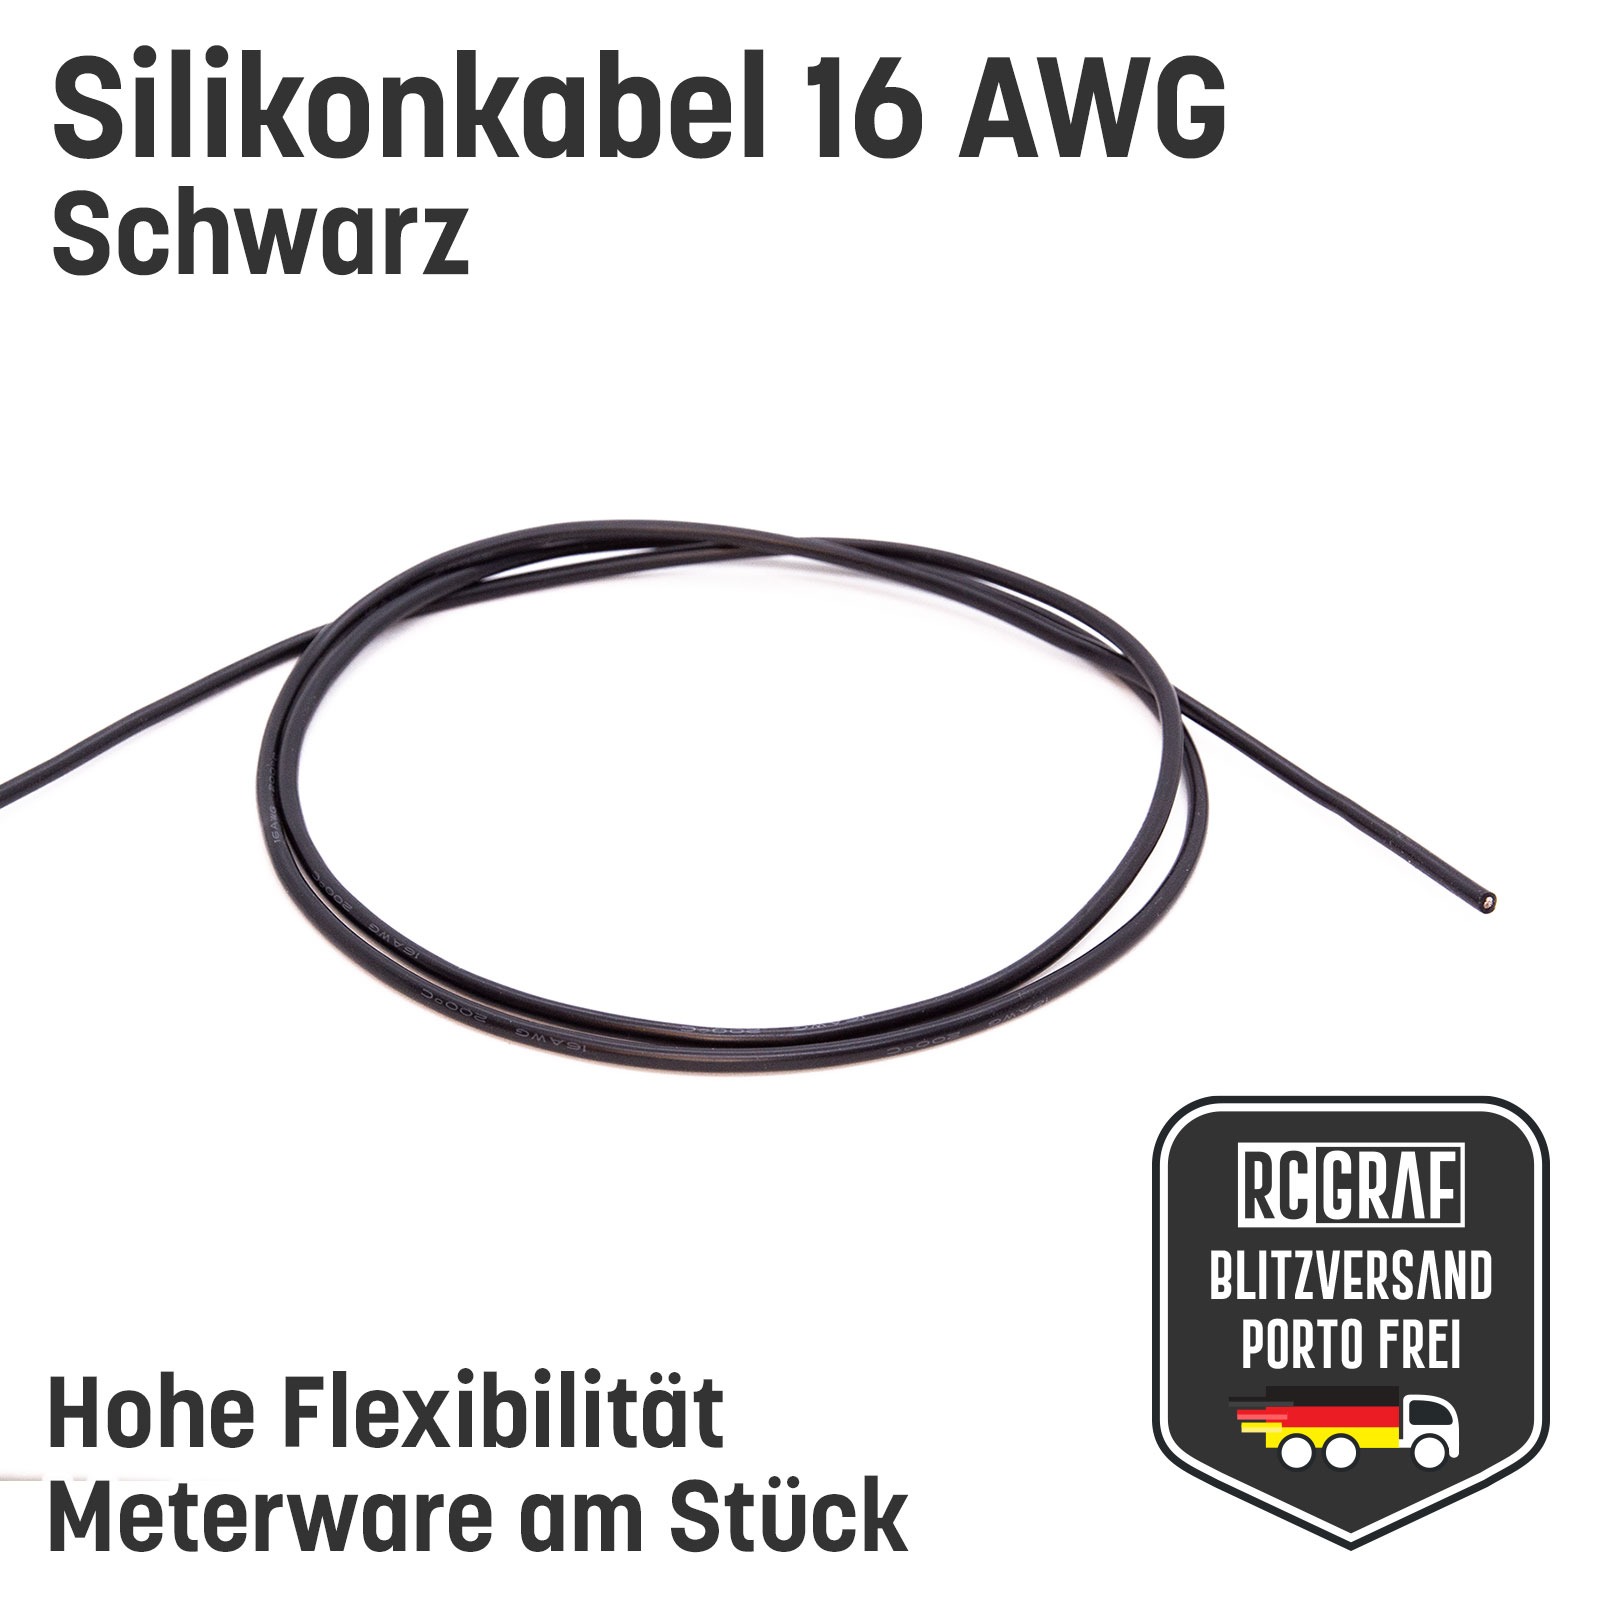 Silikonkabel 16 AWG 20 Meter Schwarz hochflexibel